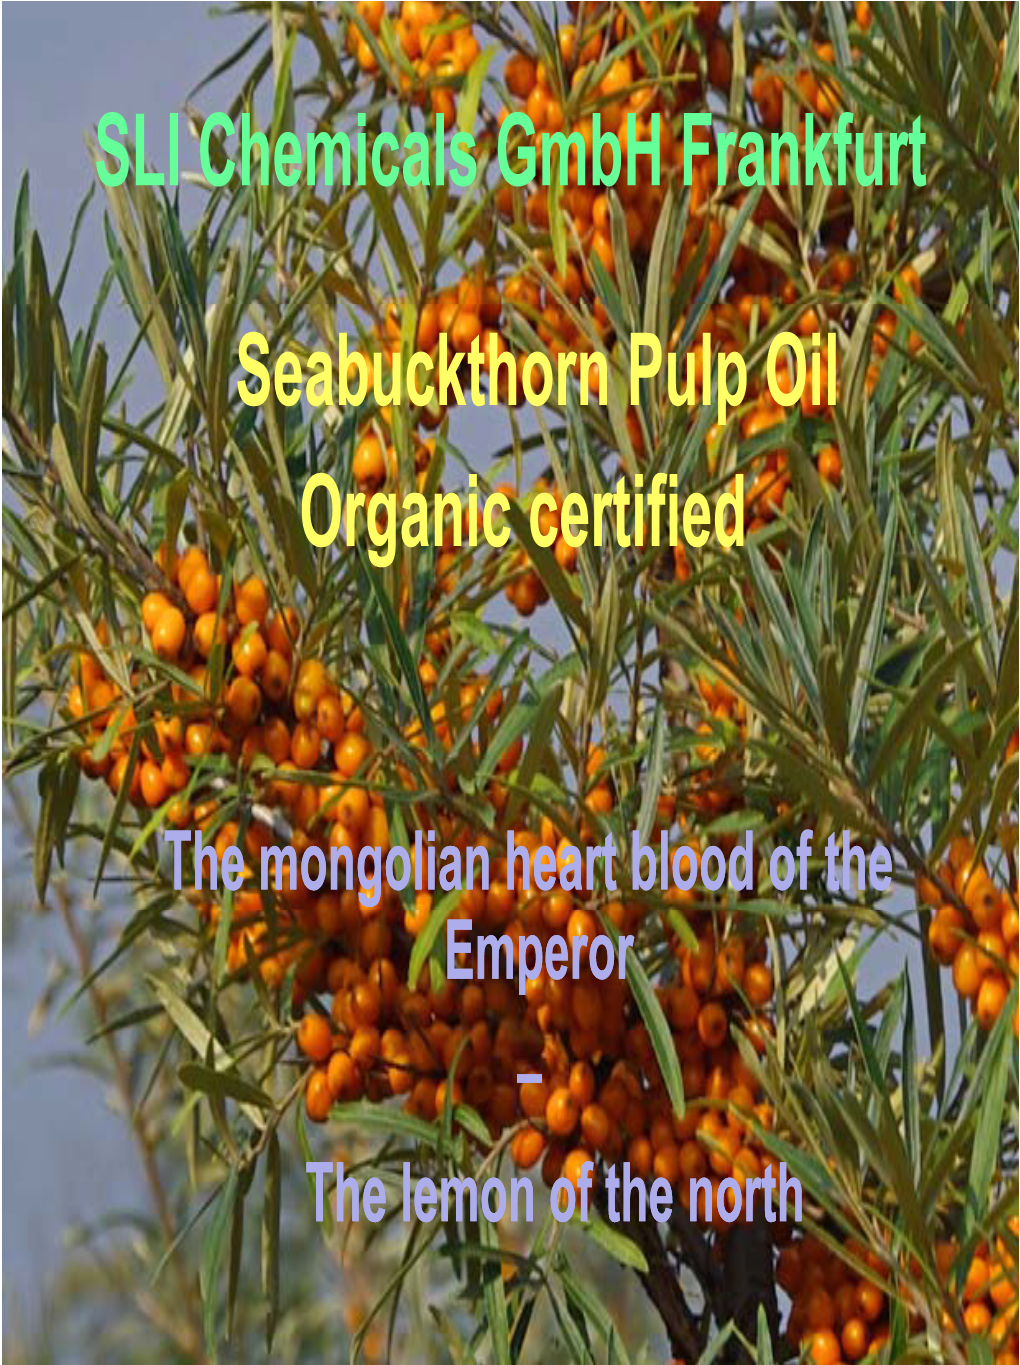 SLI Chemicals Gmbh Frankfurt Seabuckthorn Pulp Oil Organic Certified